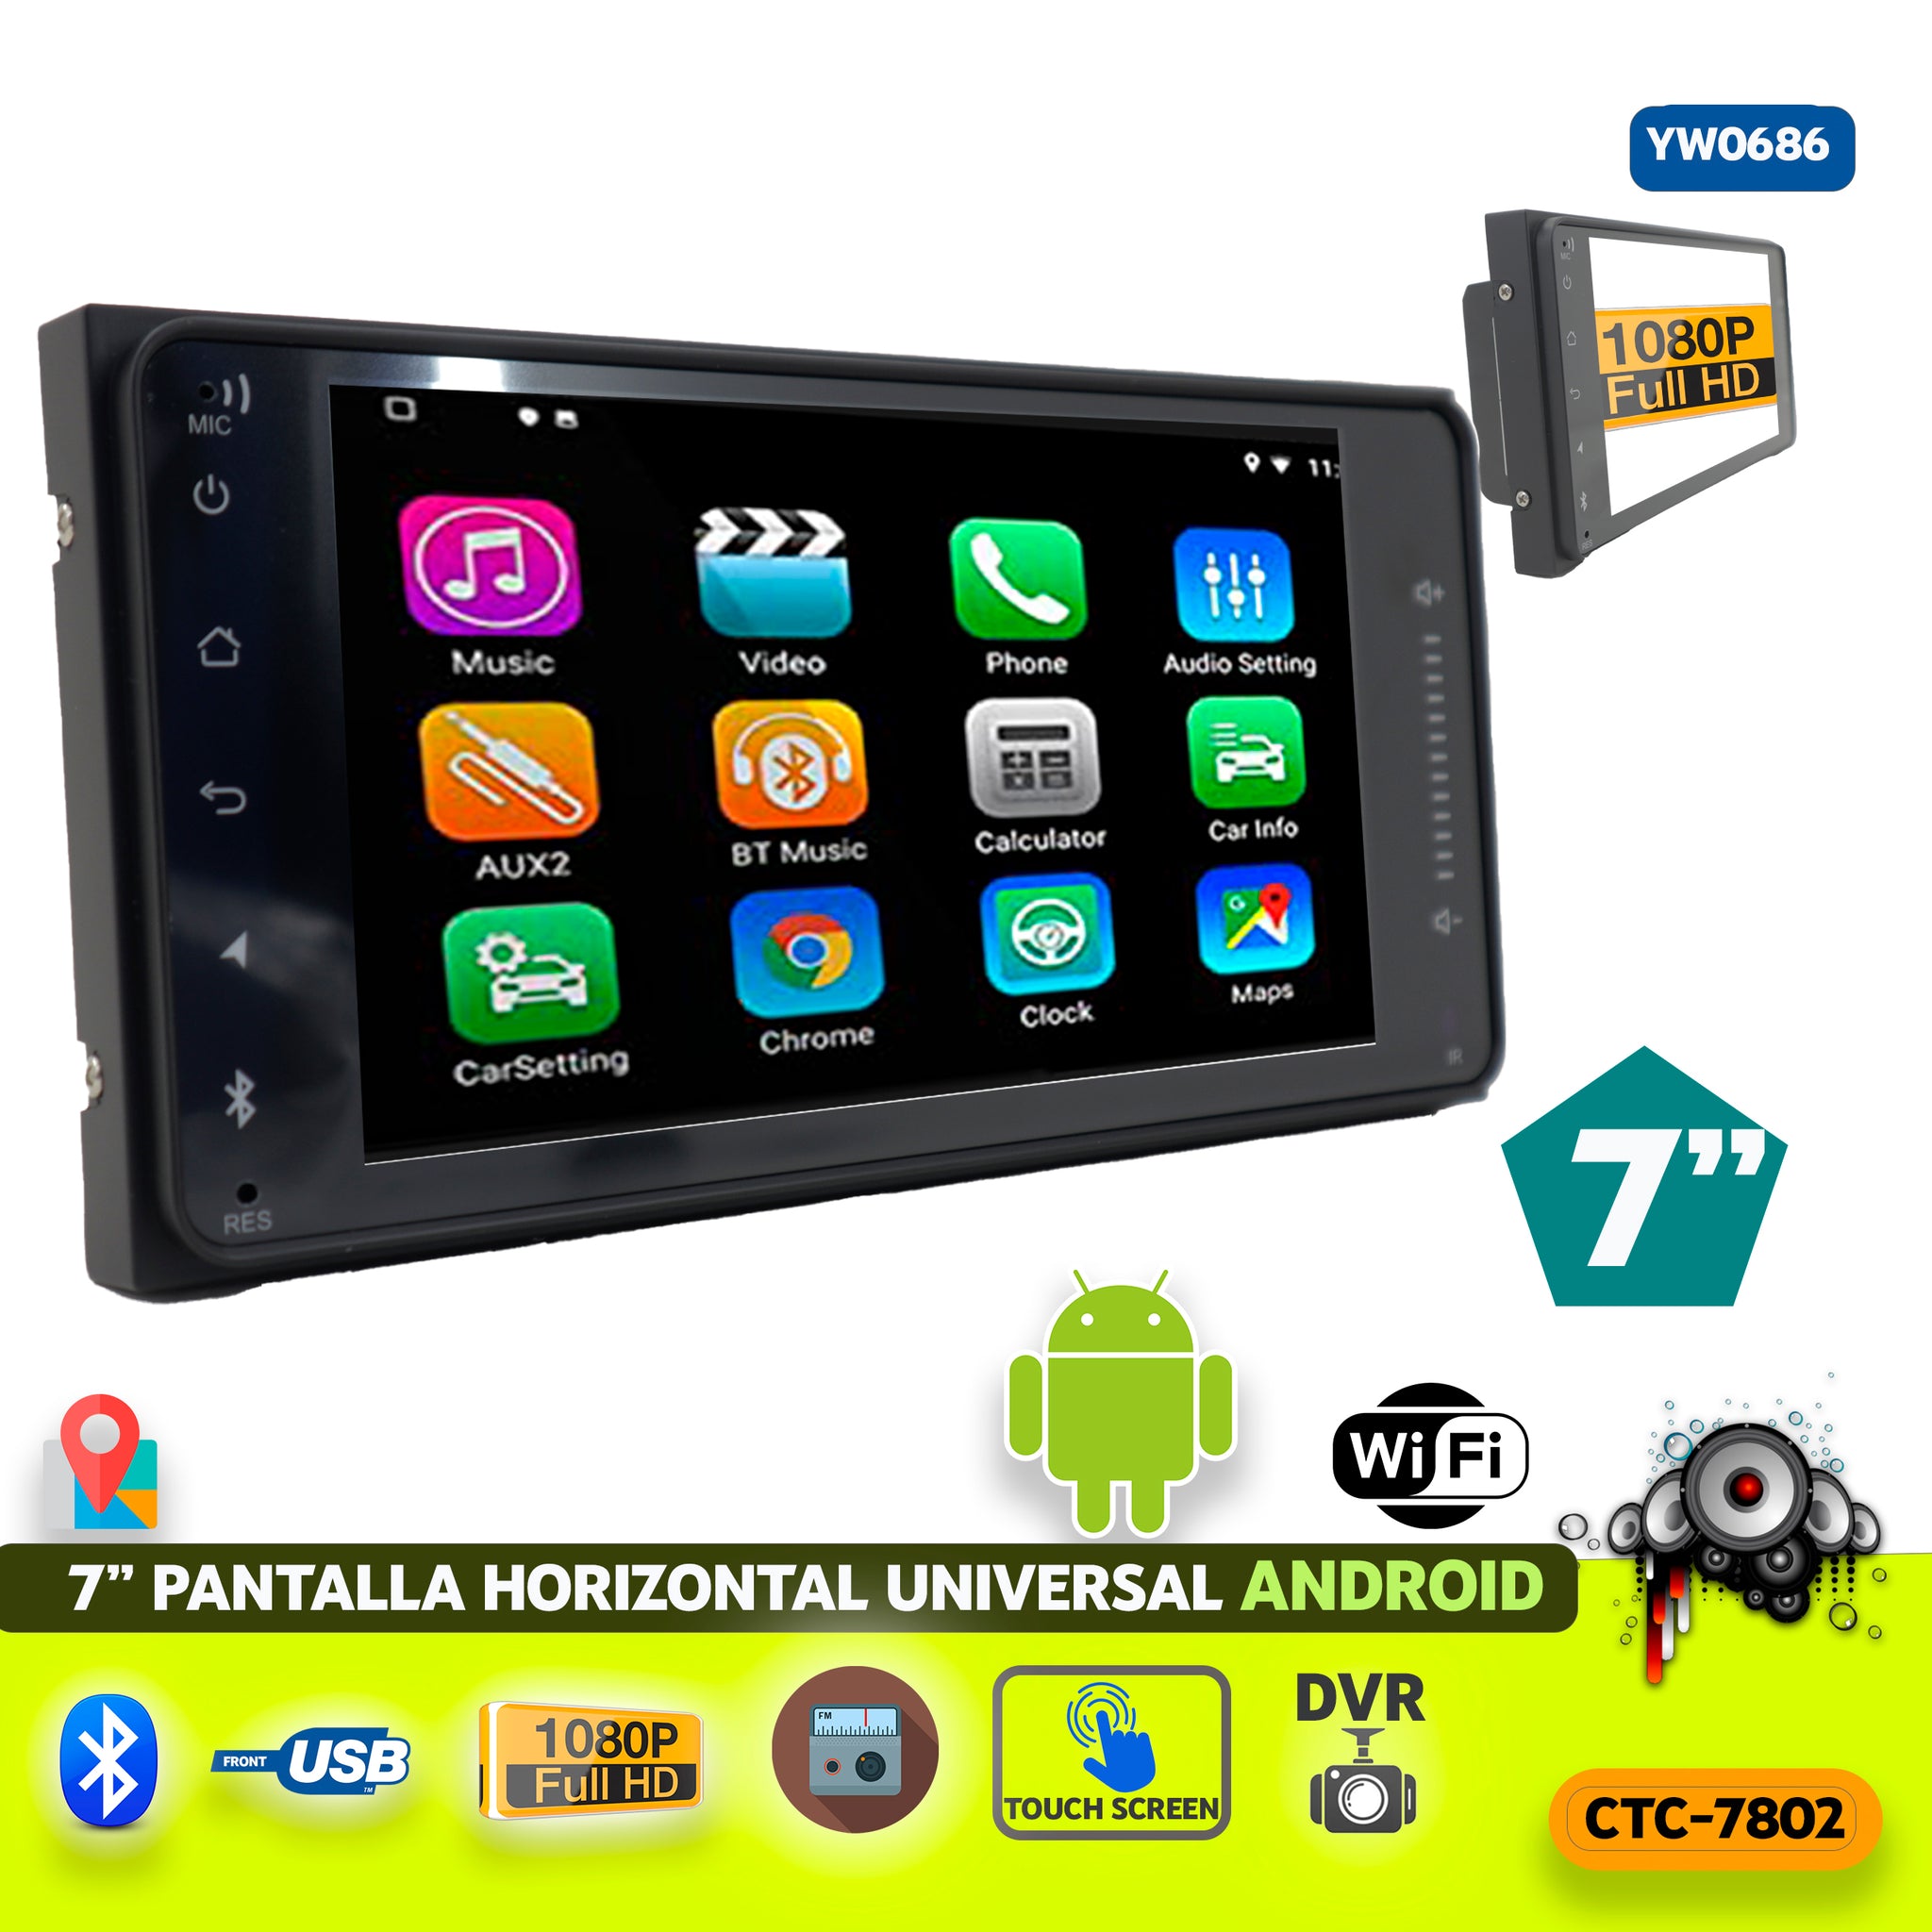 Pantalla multimedia 2 DIN Universal Android con Carplay y Android Auto  Pantalla 7 • VI7800 - Grupo Corredoira